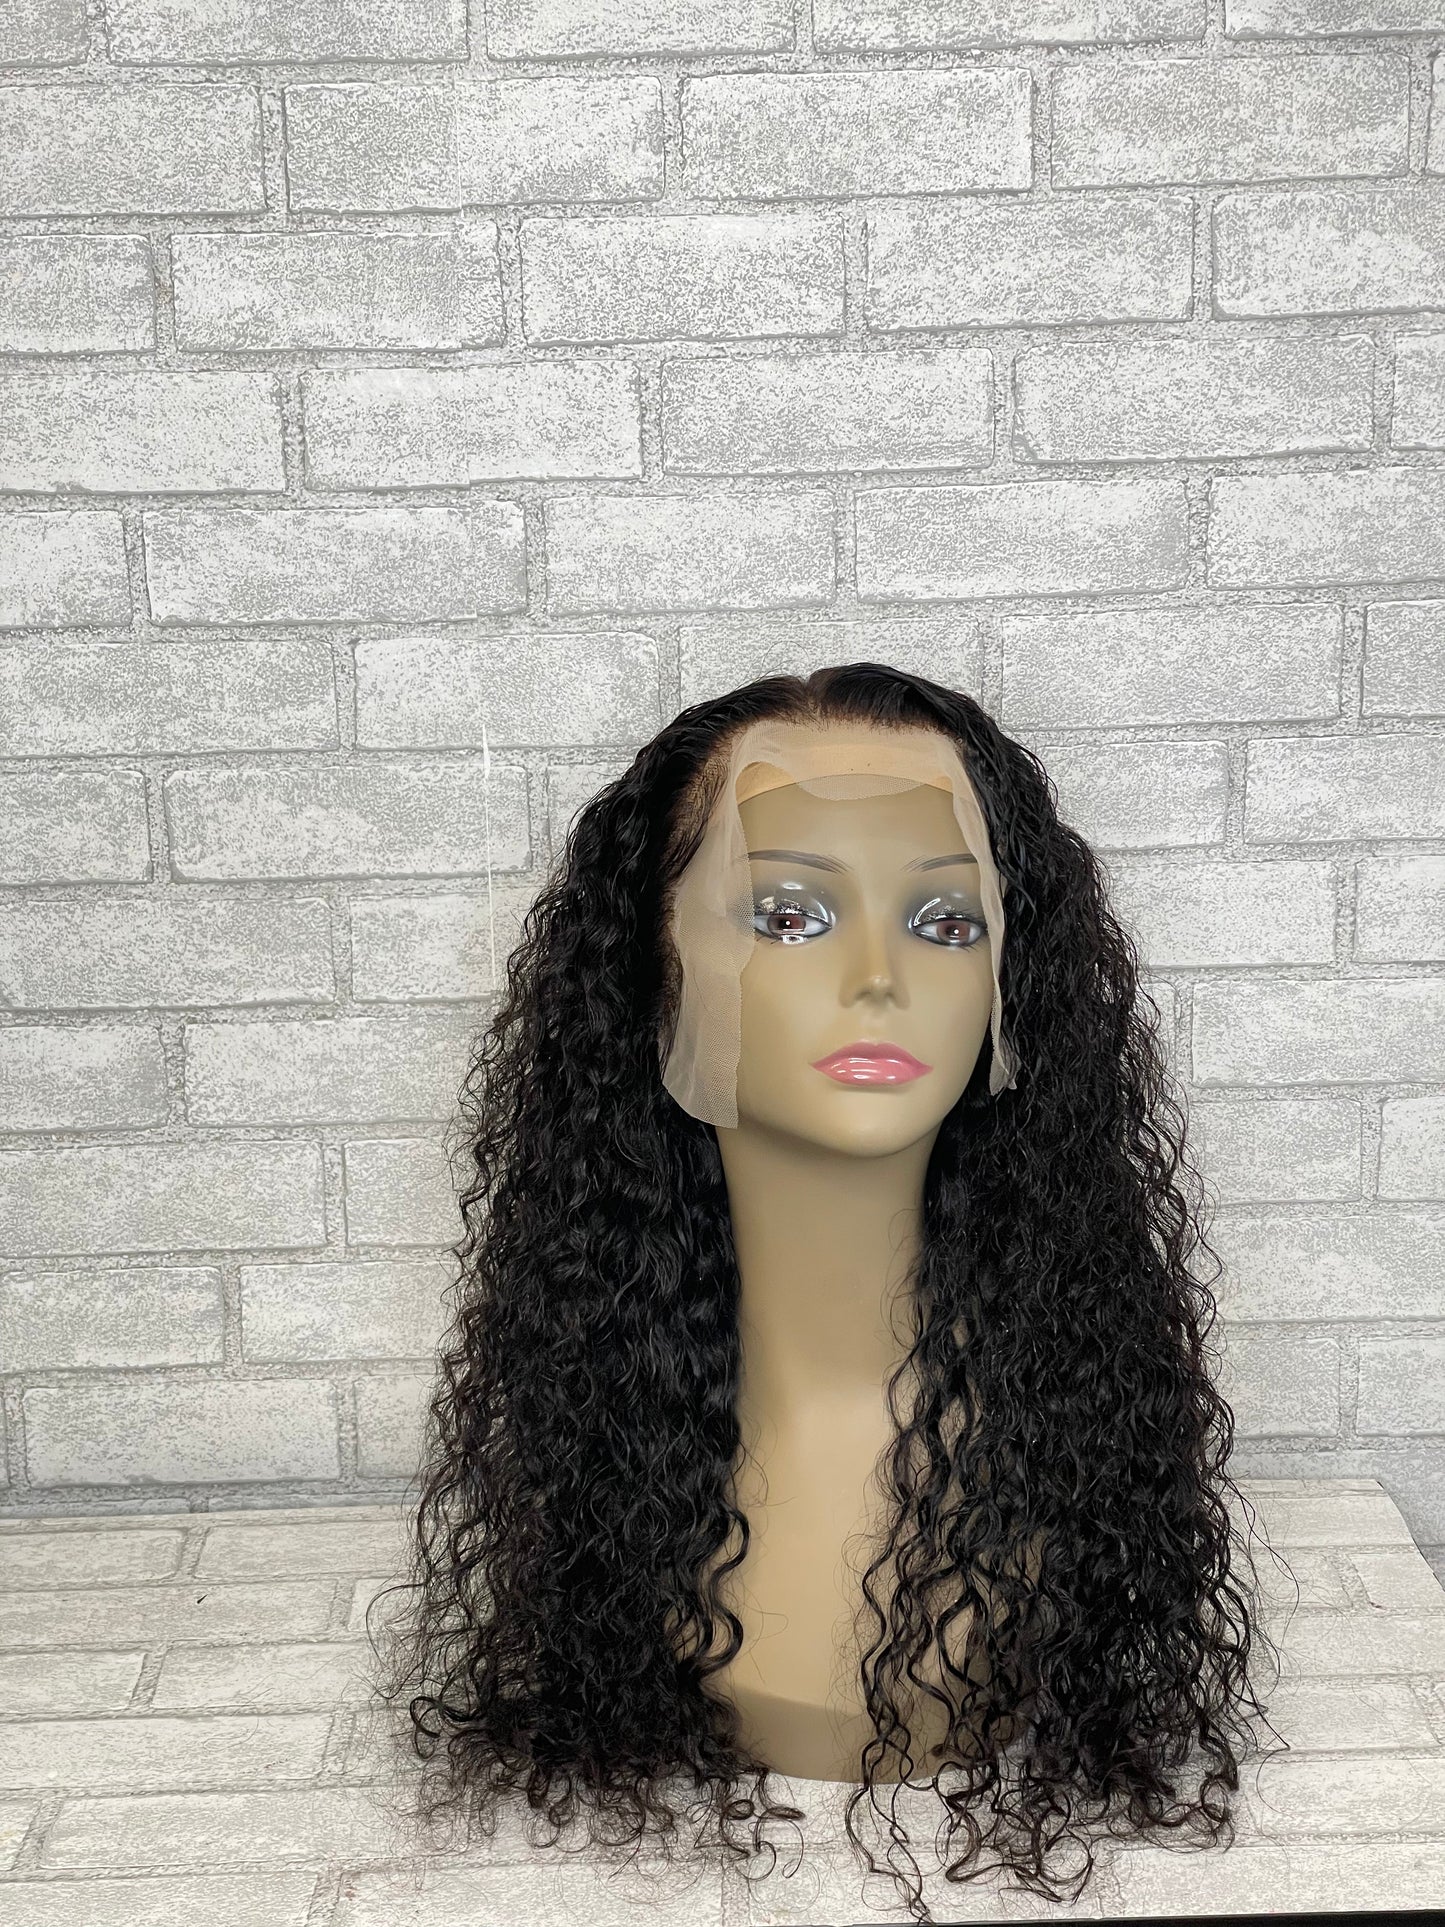 30 Inch 100% Human Hair Full Frontal Glueless Wig